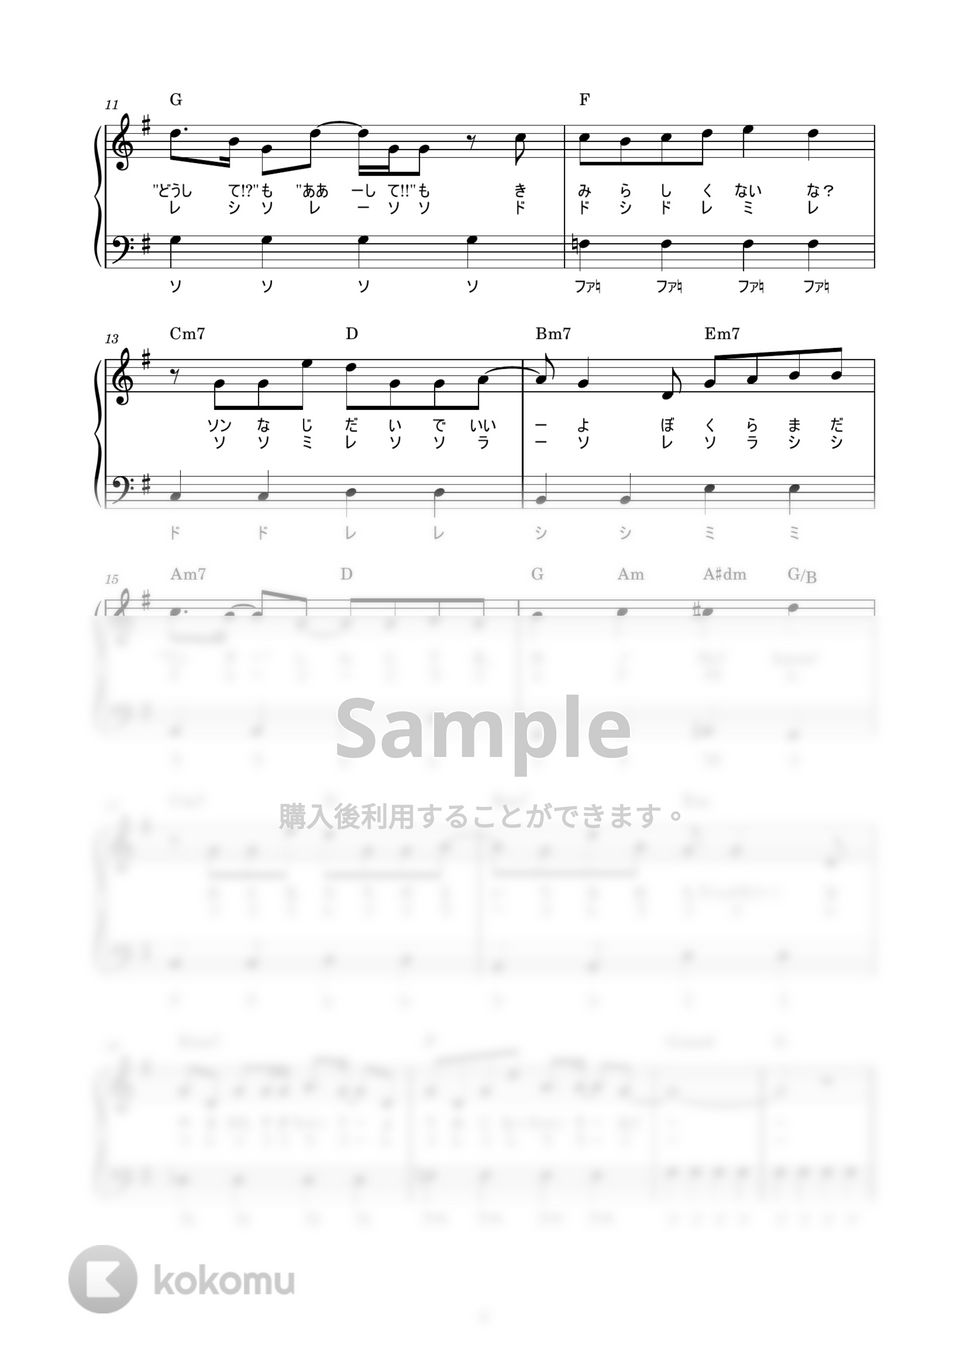 sasakure.UK - トンデモワンダーズ feat. 初音ミク (かんたん / 歌詞付き / ドレミ付き / 初心者) by piano.tokyo